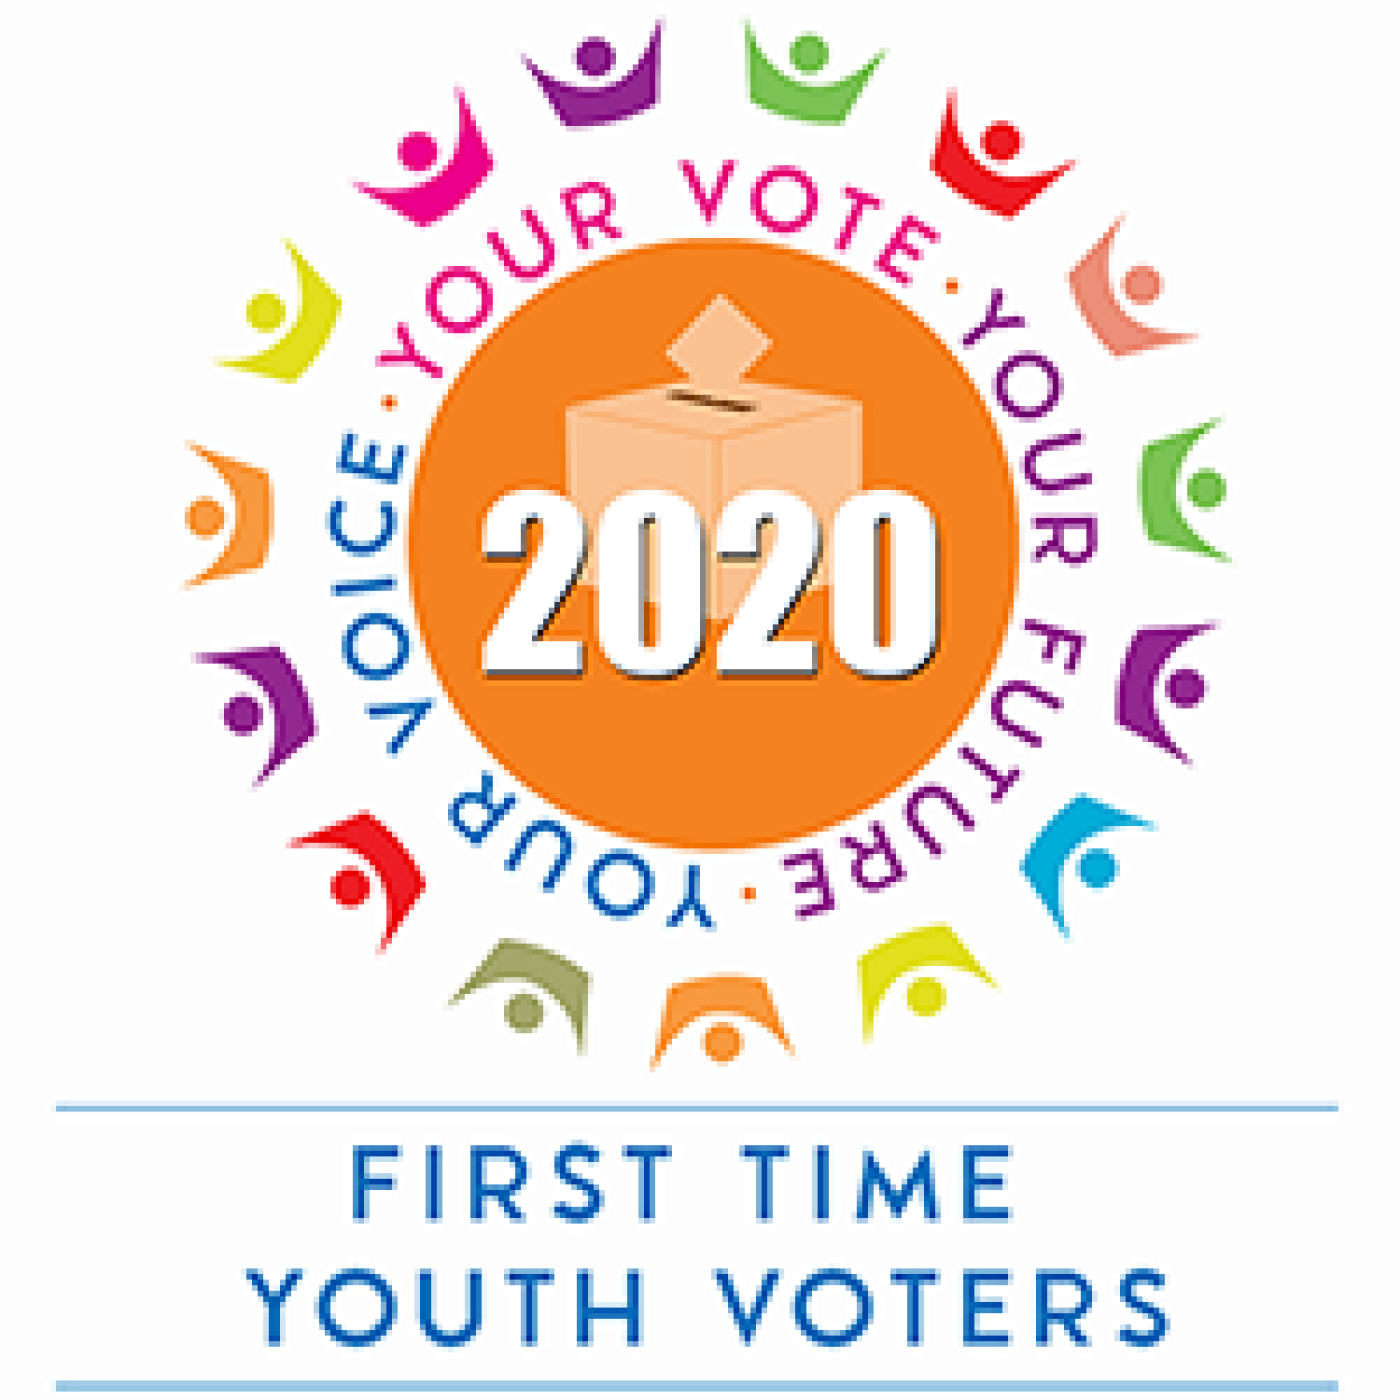 Your Voice, Your Vote, Your Future program logo